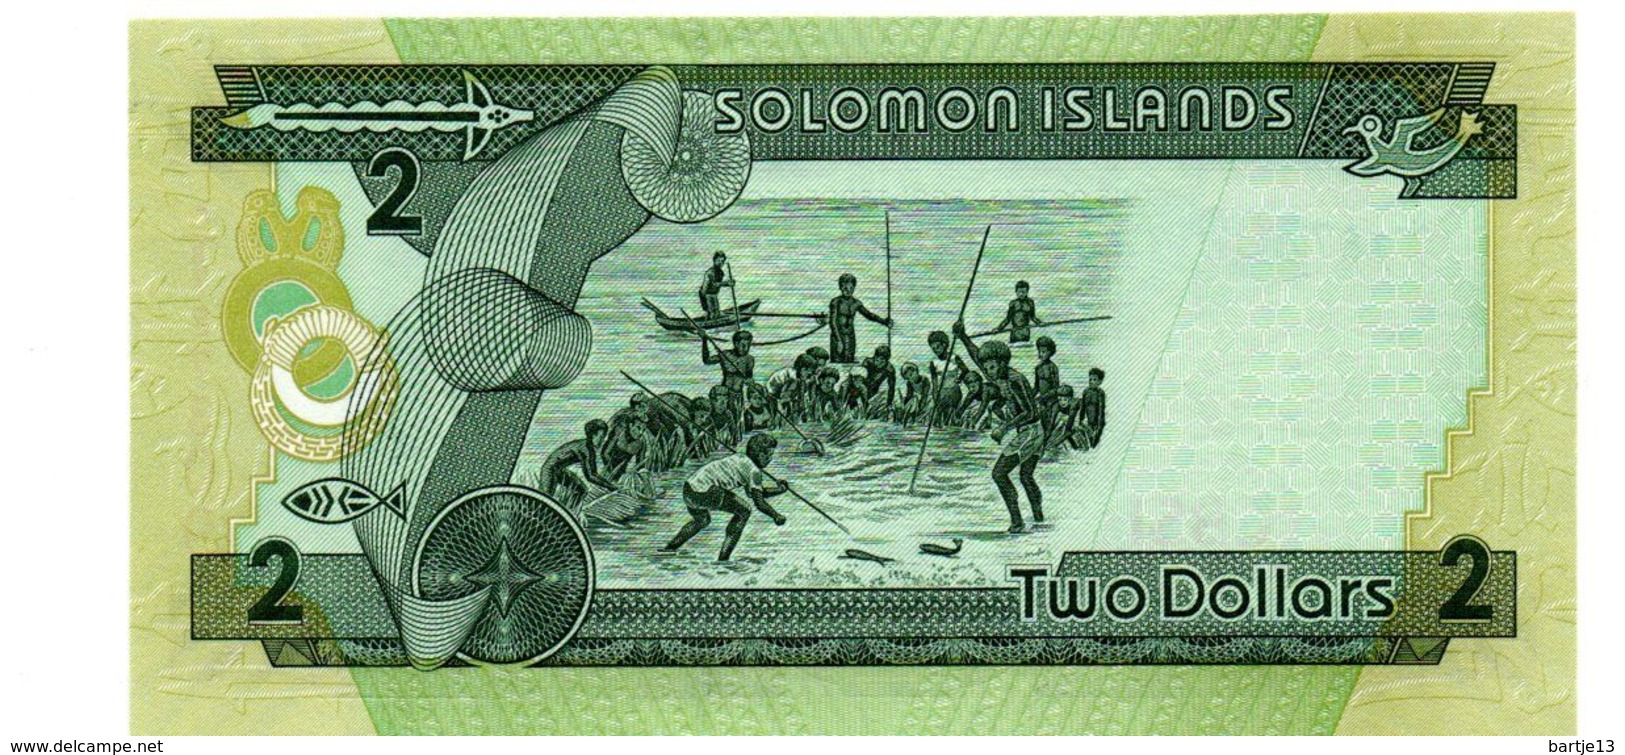 SOLOMON ISLANDS 2 DOLLARS PICK 18 UNCIRCULATED POLYMEER - Isola Salomon